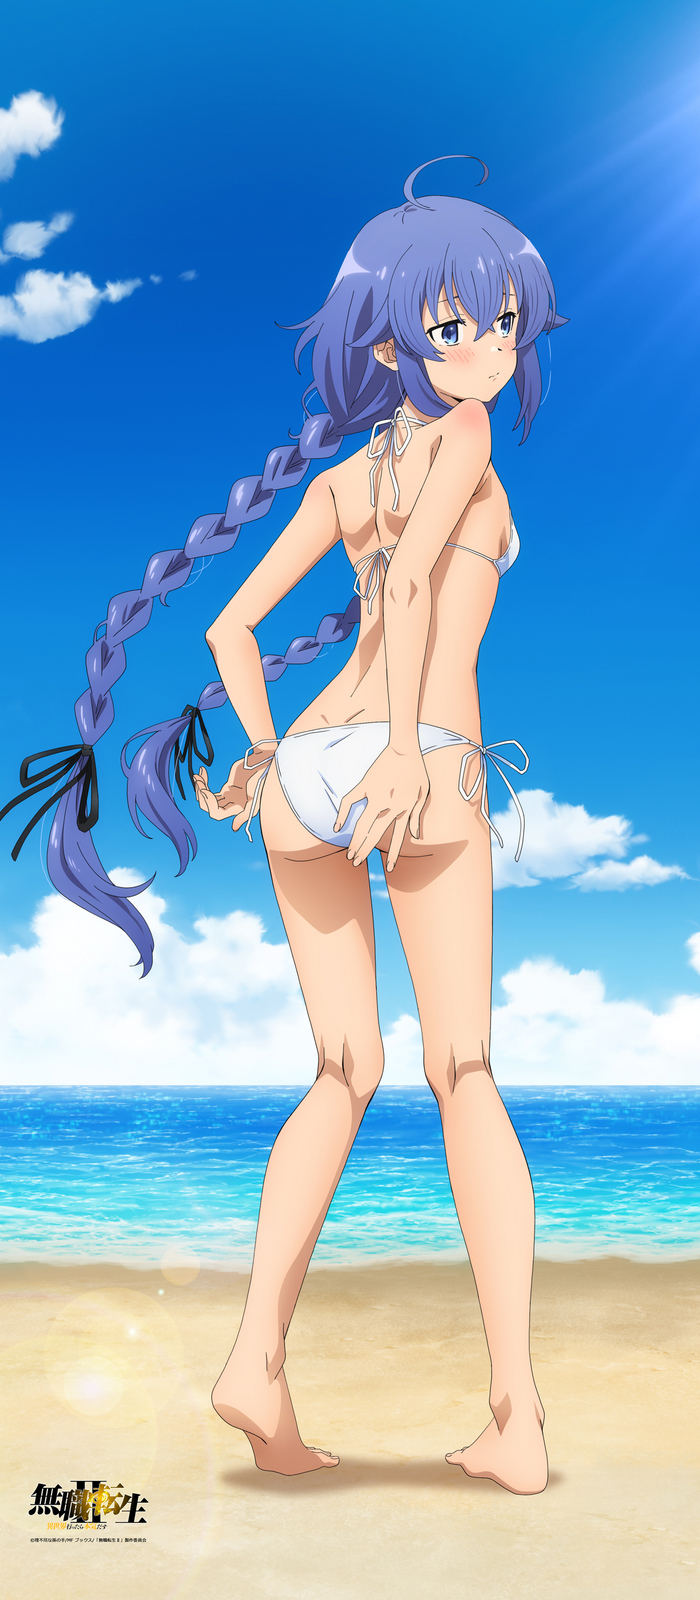 Goddess on the beach - NSFW, Roxy migurdia, Anime, Anime art, Swimsuit, Beach, Mushoku tensei, Longpost, Booty